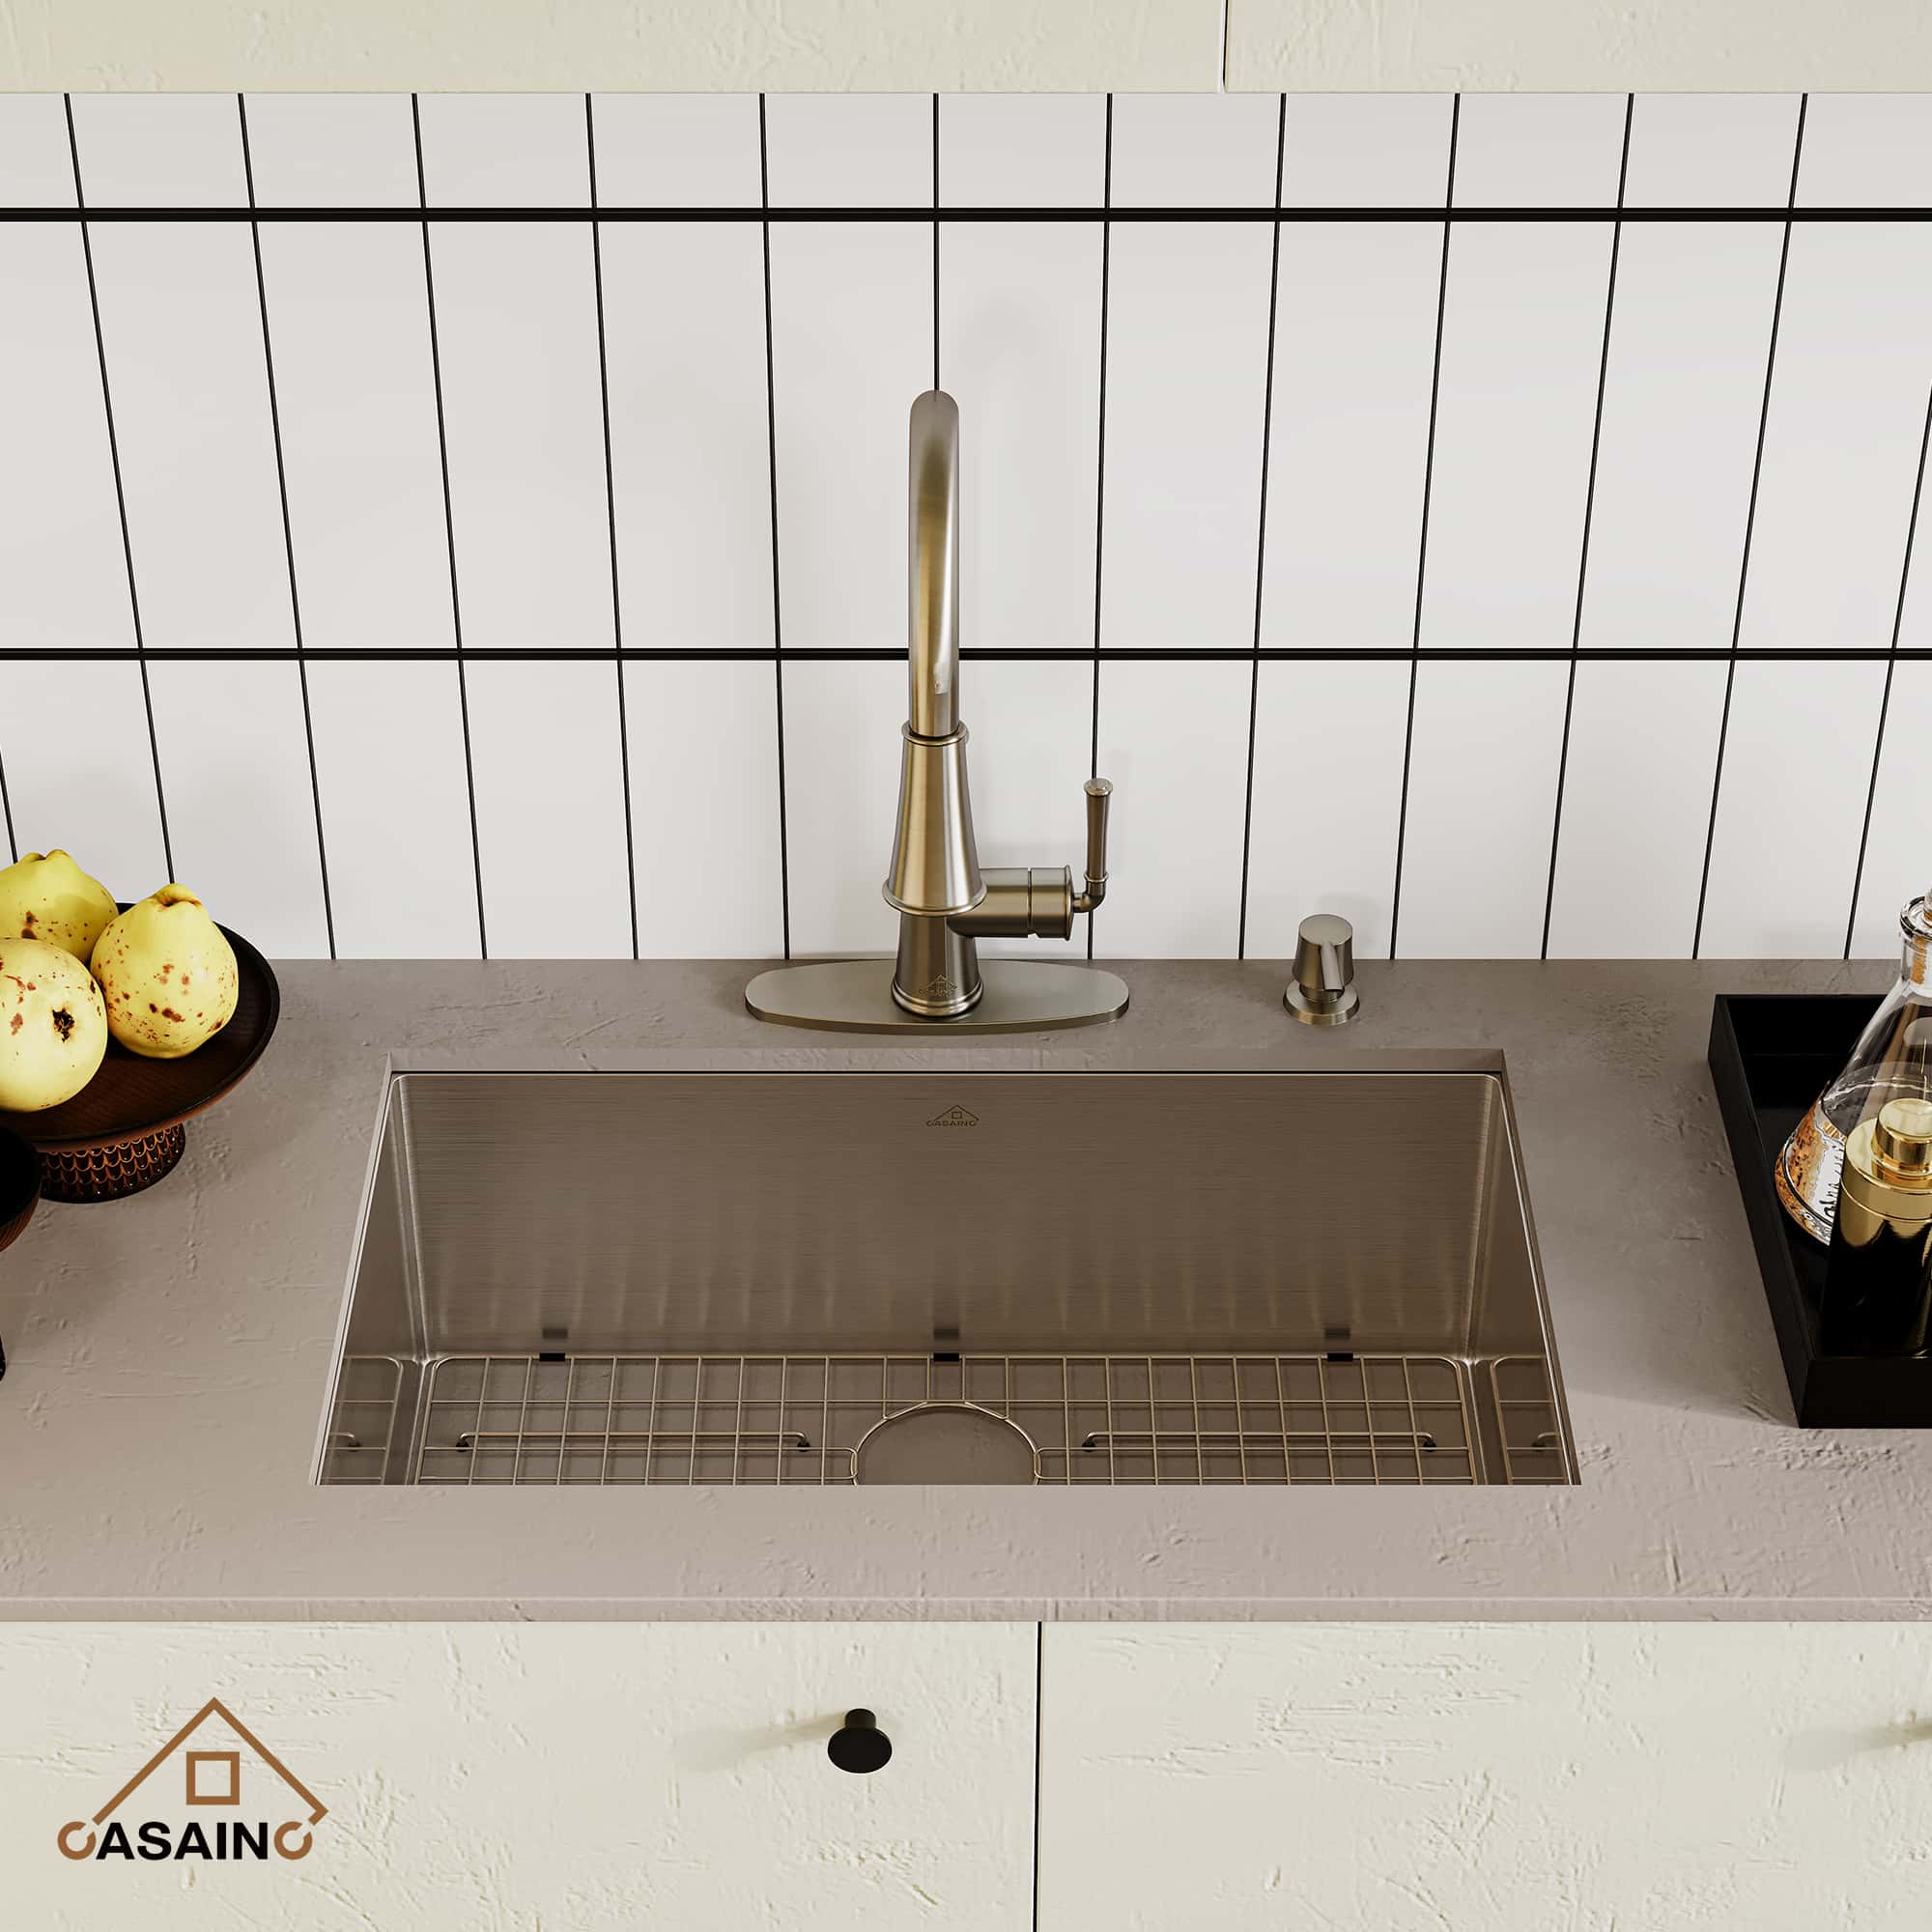 CASAINC Undermount Stainless Steel 32-inch Single Bowl Kitchen Sink in Brushed-Casainc Canada